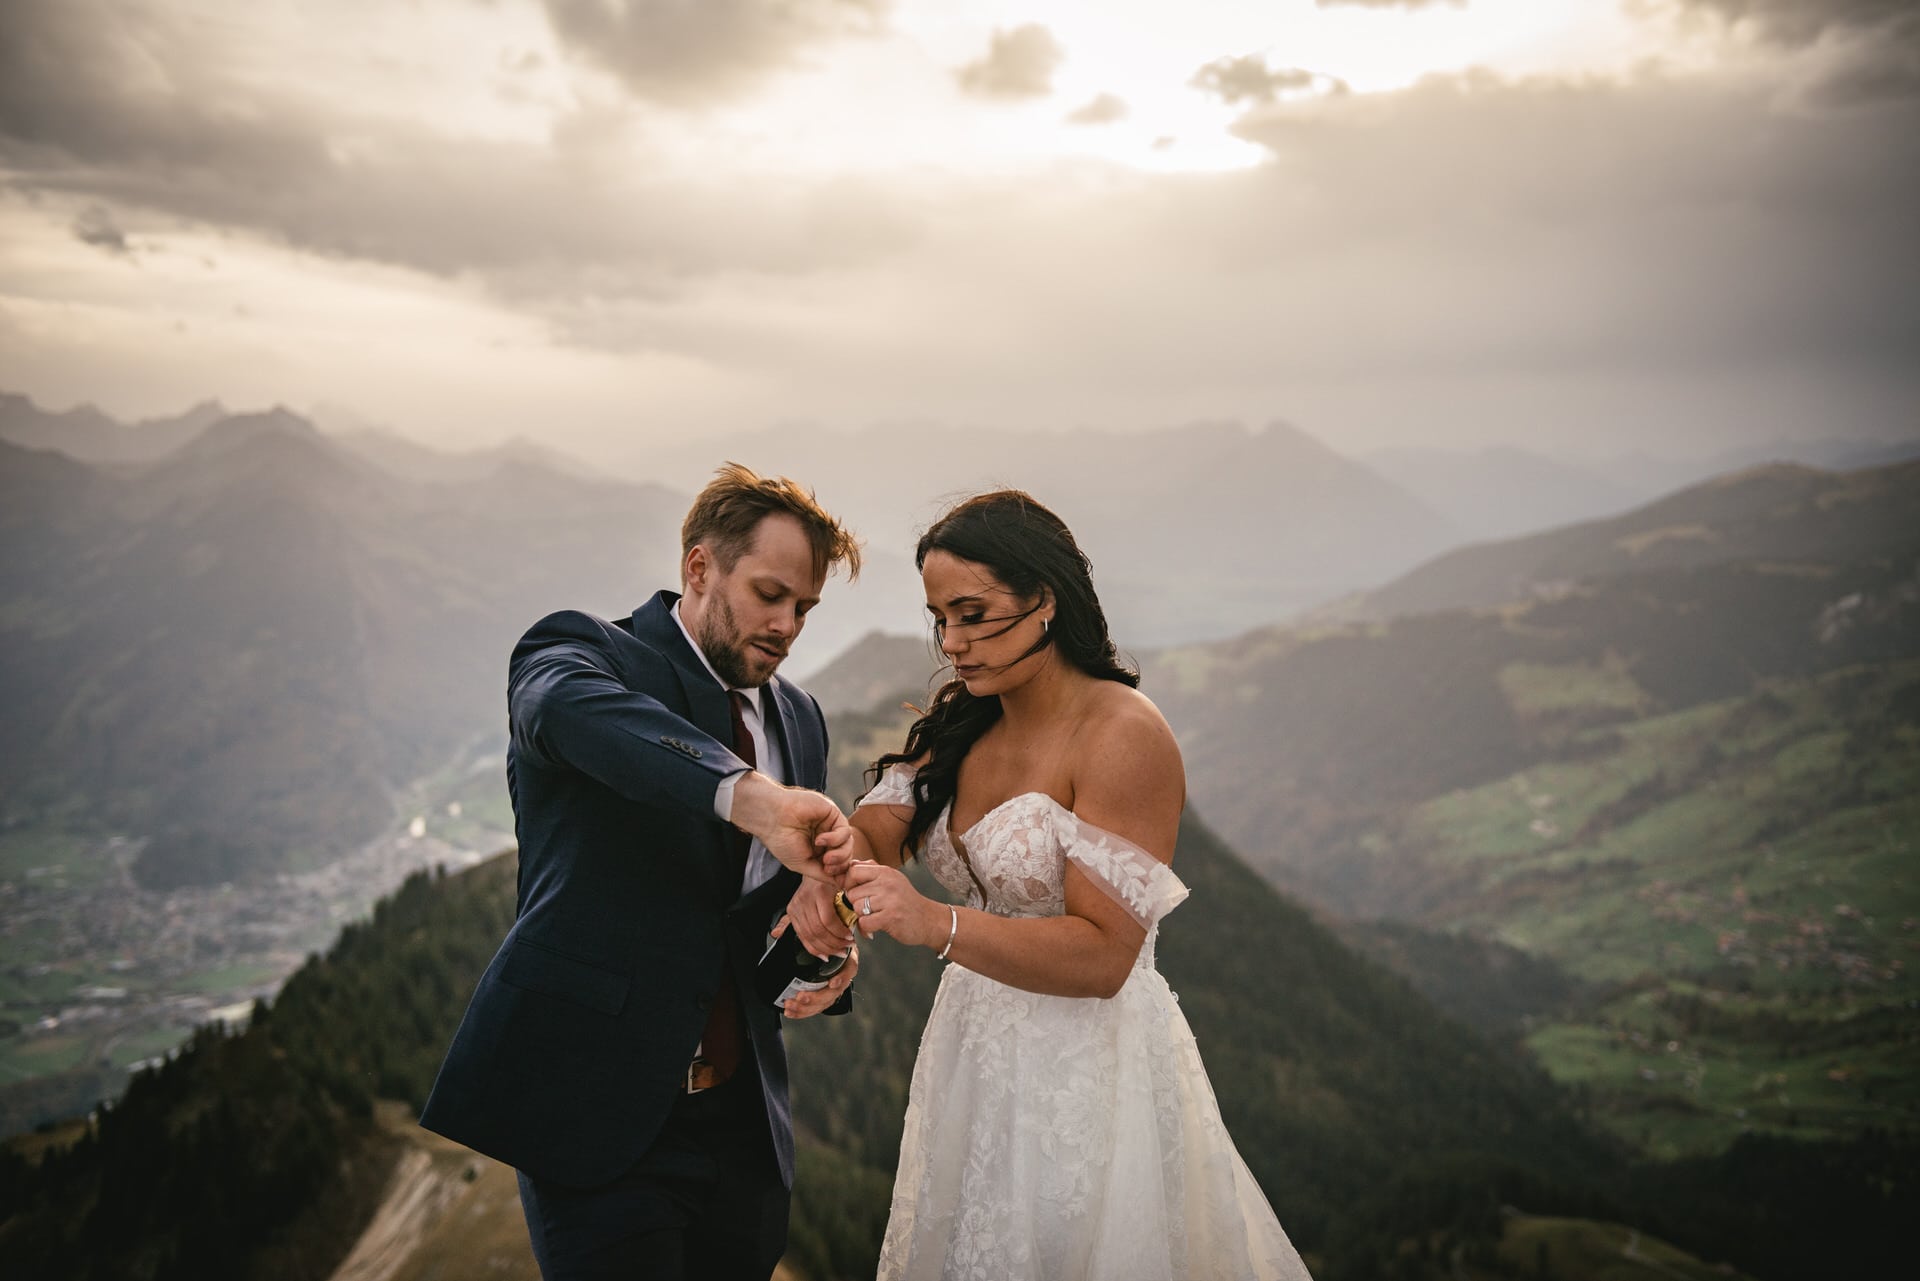 Couple on their elopement day in the Interlaken region of Switzerland - popping champagne